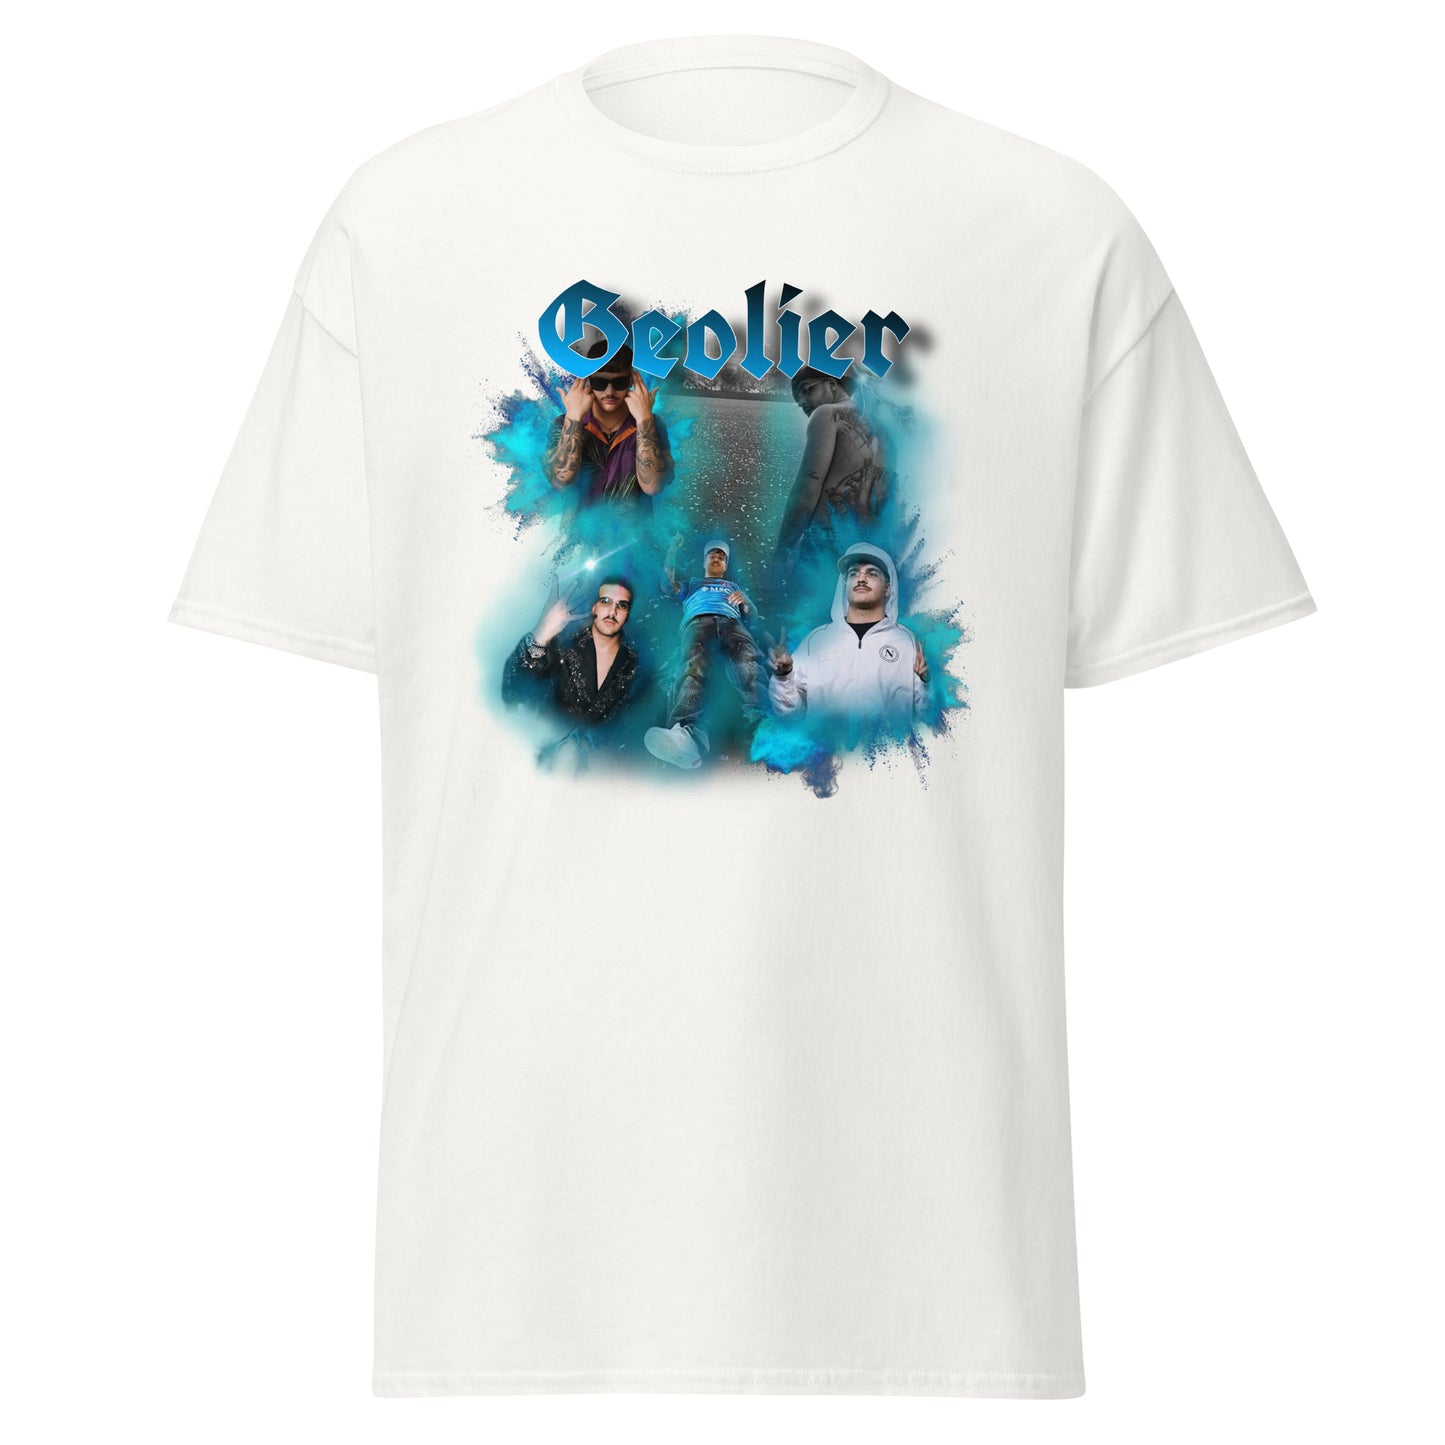 T-Shirt unisex stampa Geolier